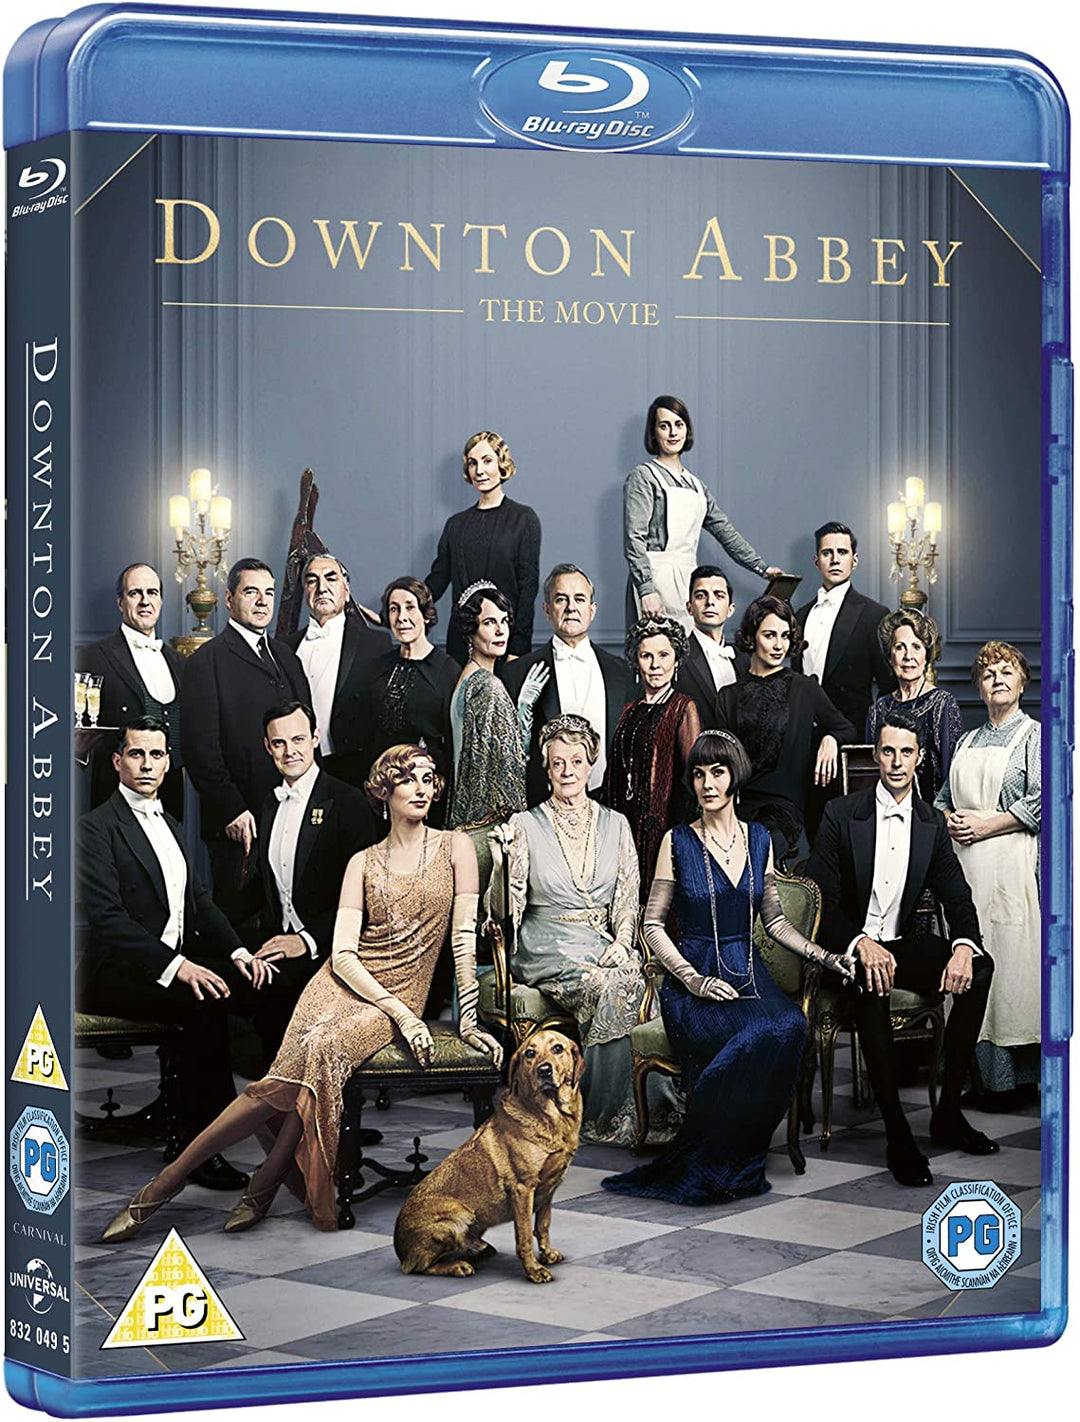 Downton Abbey The Movie - Drama/Romance [Blu-ray]